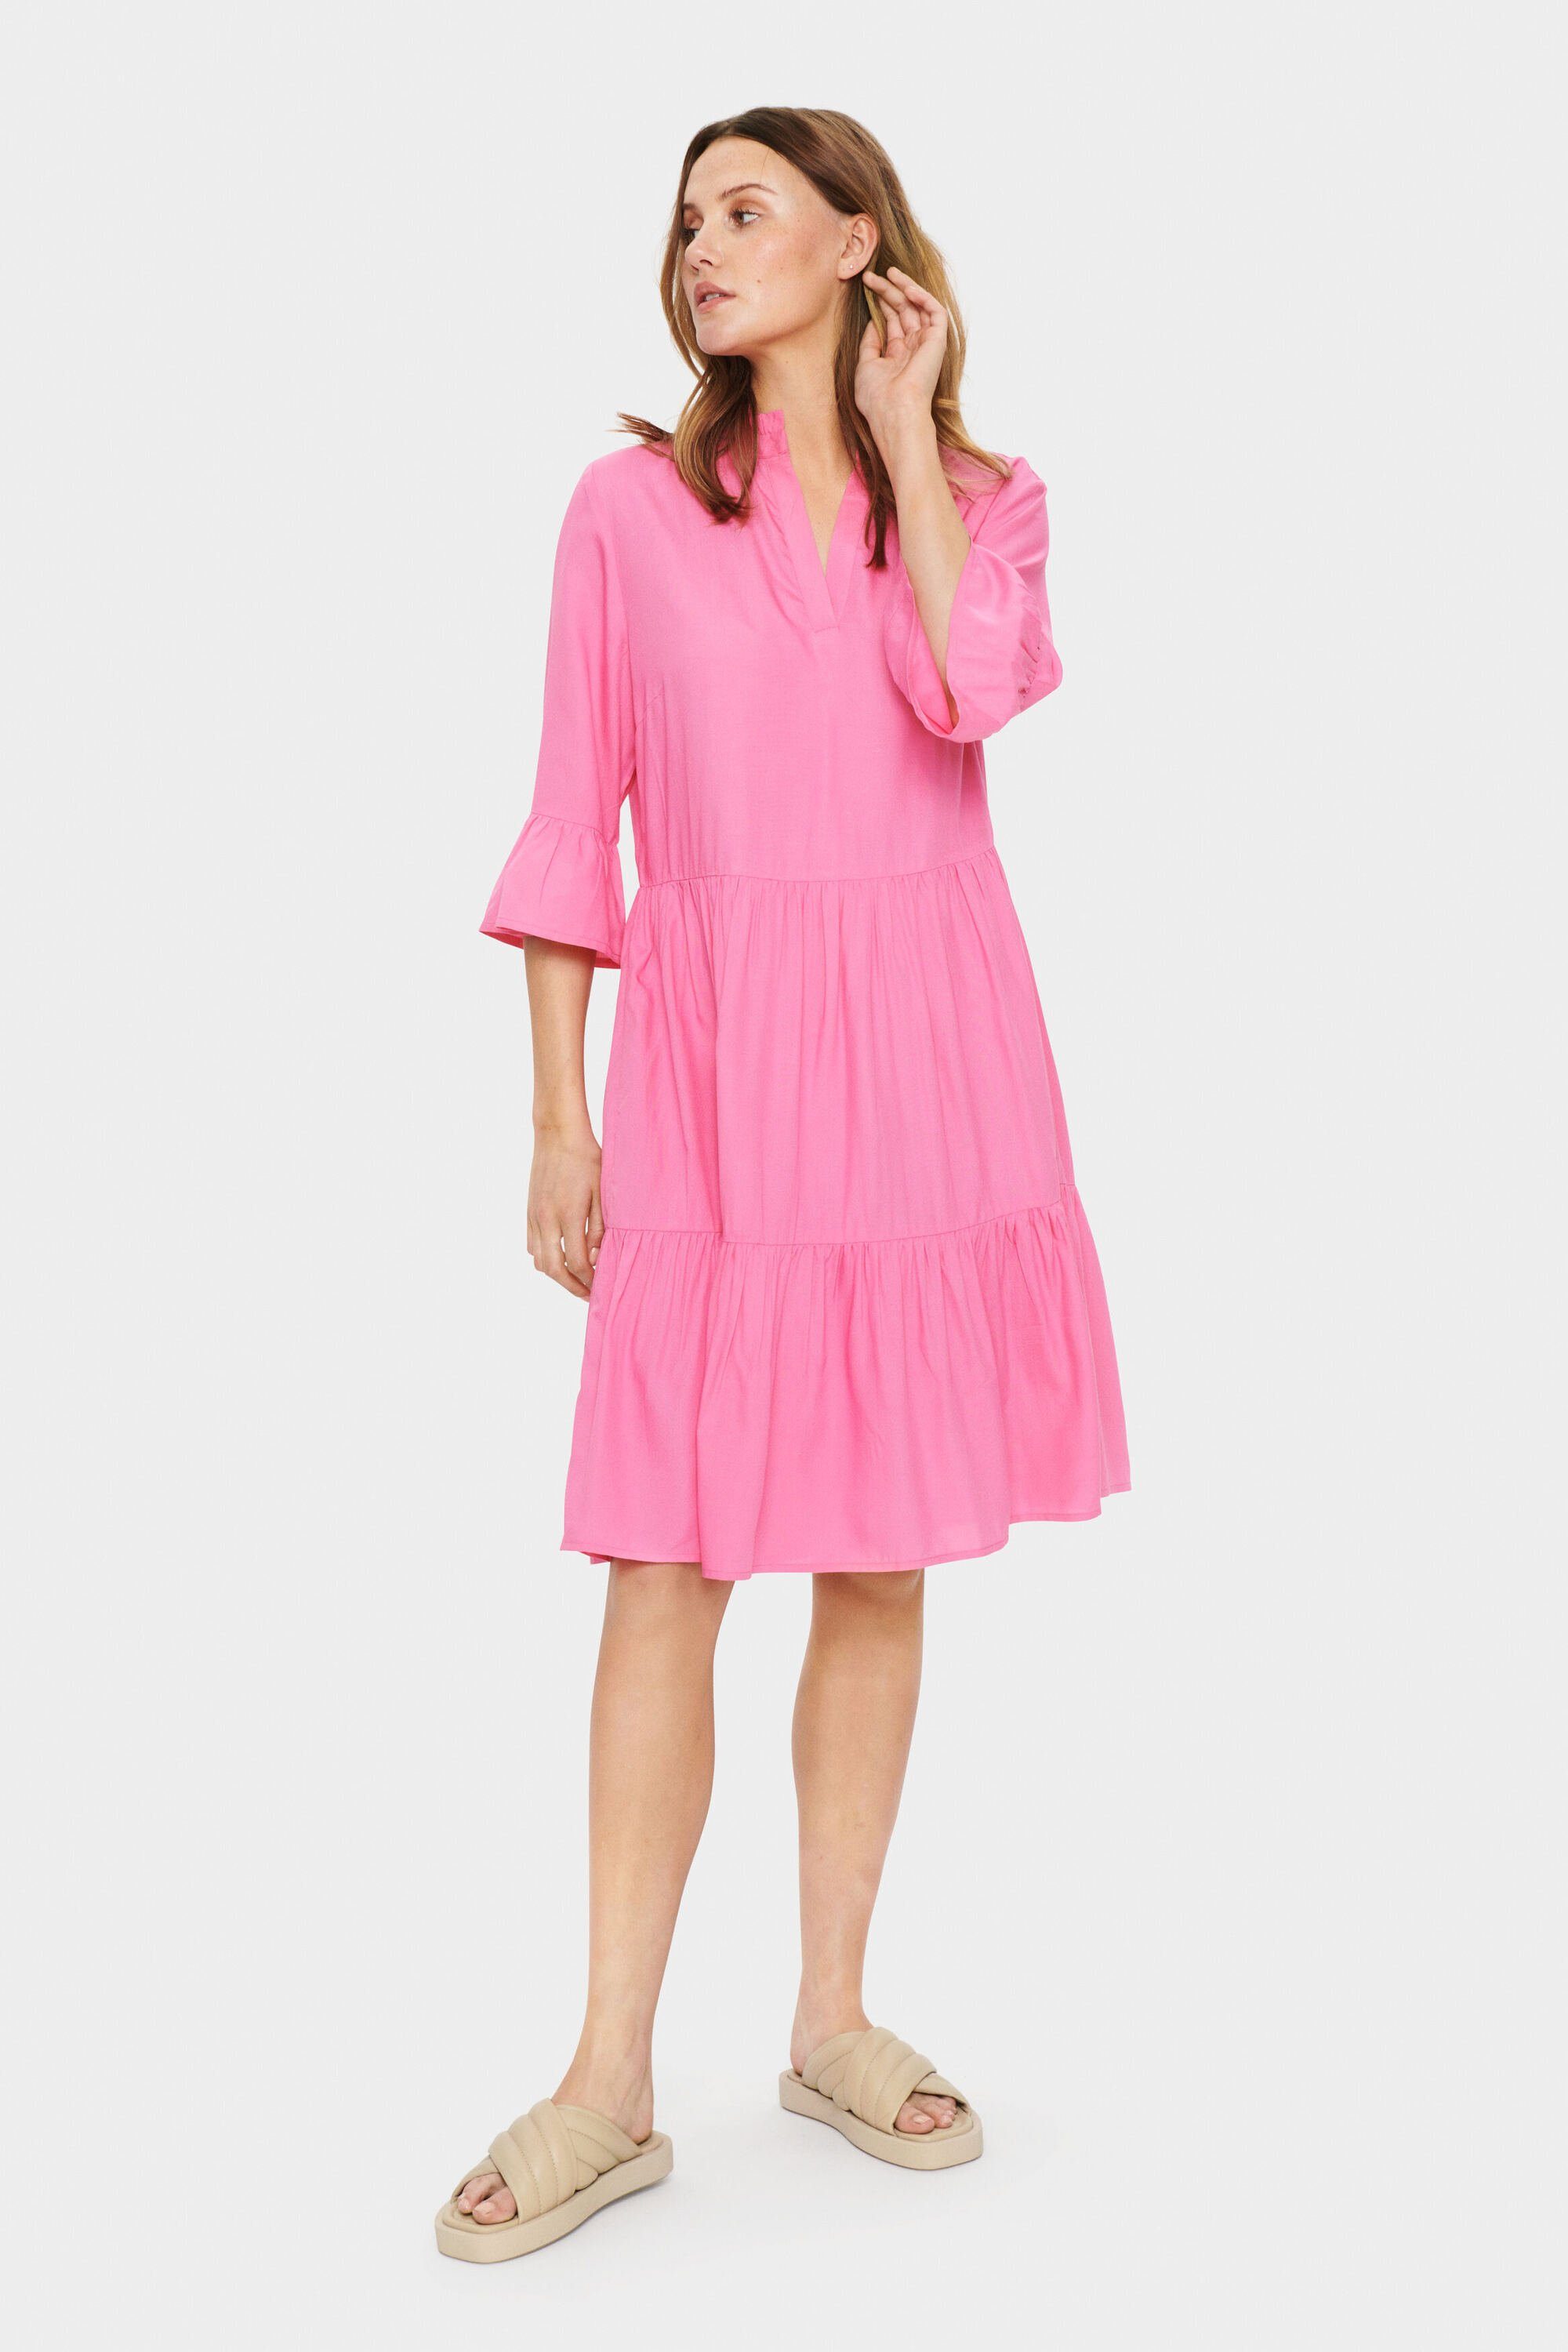 Jerseykleid Saint Azalea Tropez Pink Kleid EdaSZ